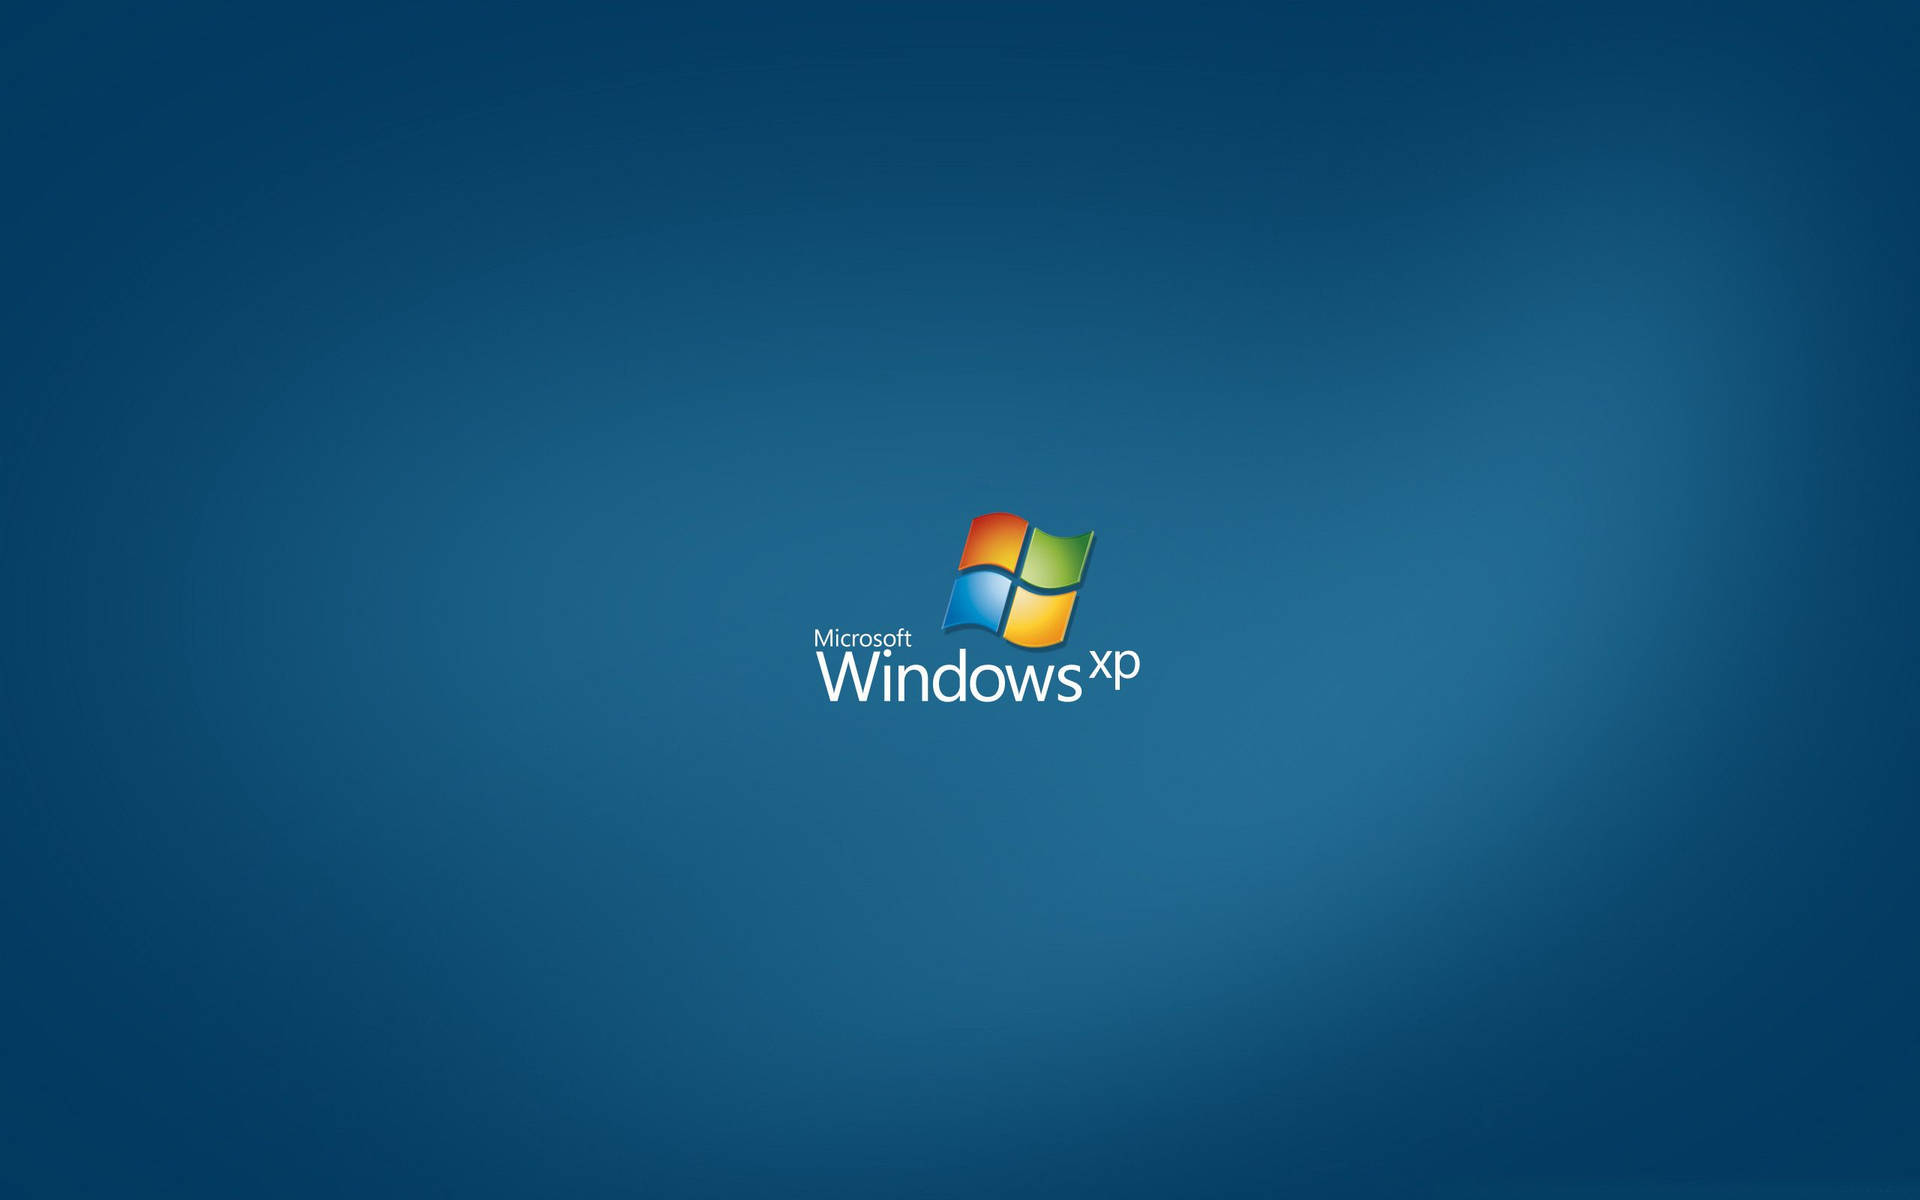 Windows Xp Logo On A Blue Background Background